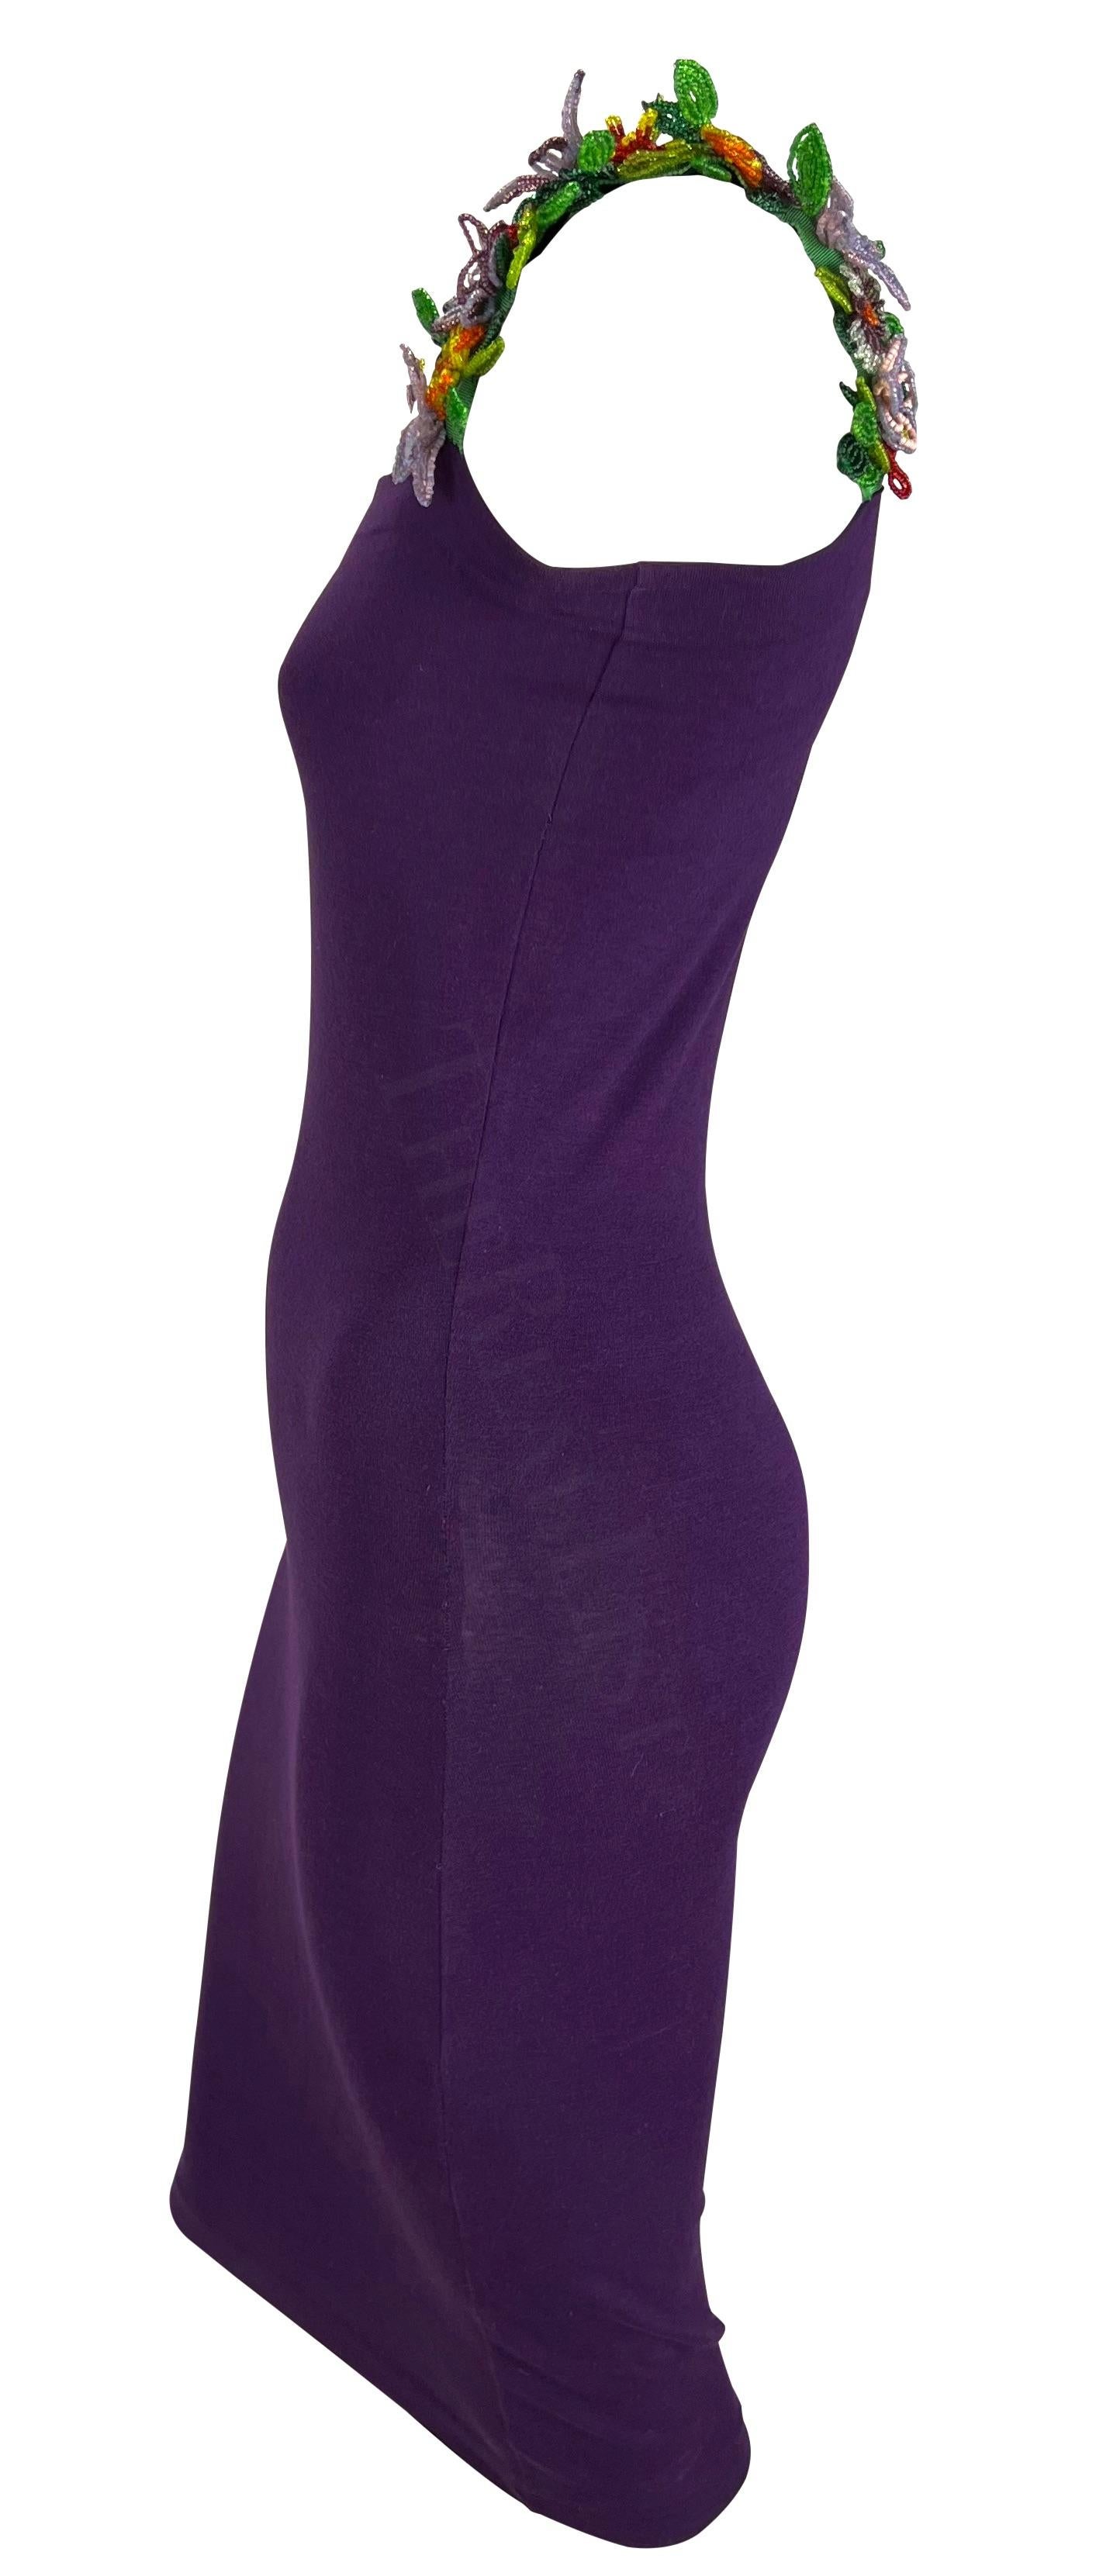 S/S 1992 Dolce & Gabbana Purple Mini Dress Floral Beaded Straps 1